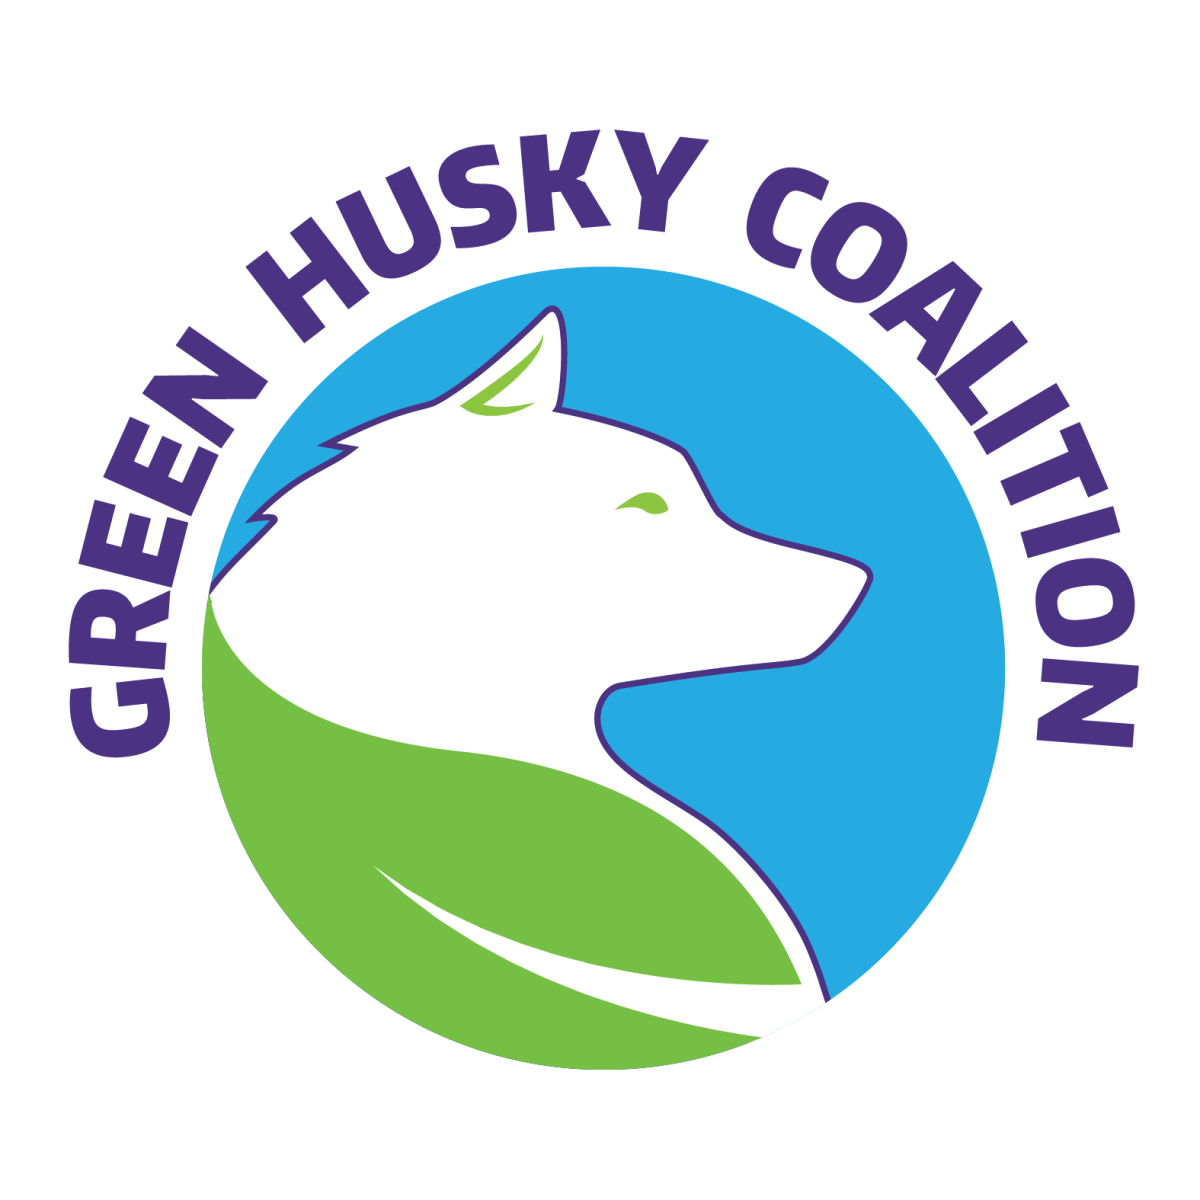 Green Husky Coalition Meeting